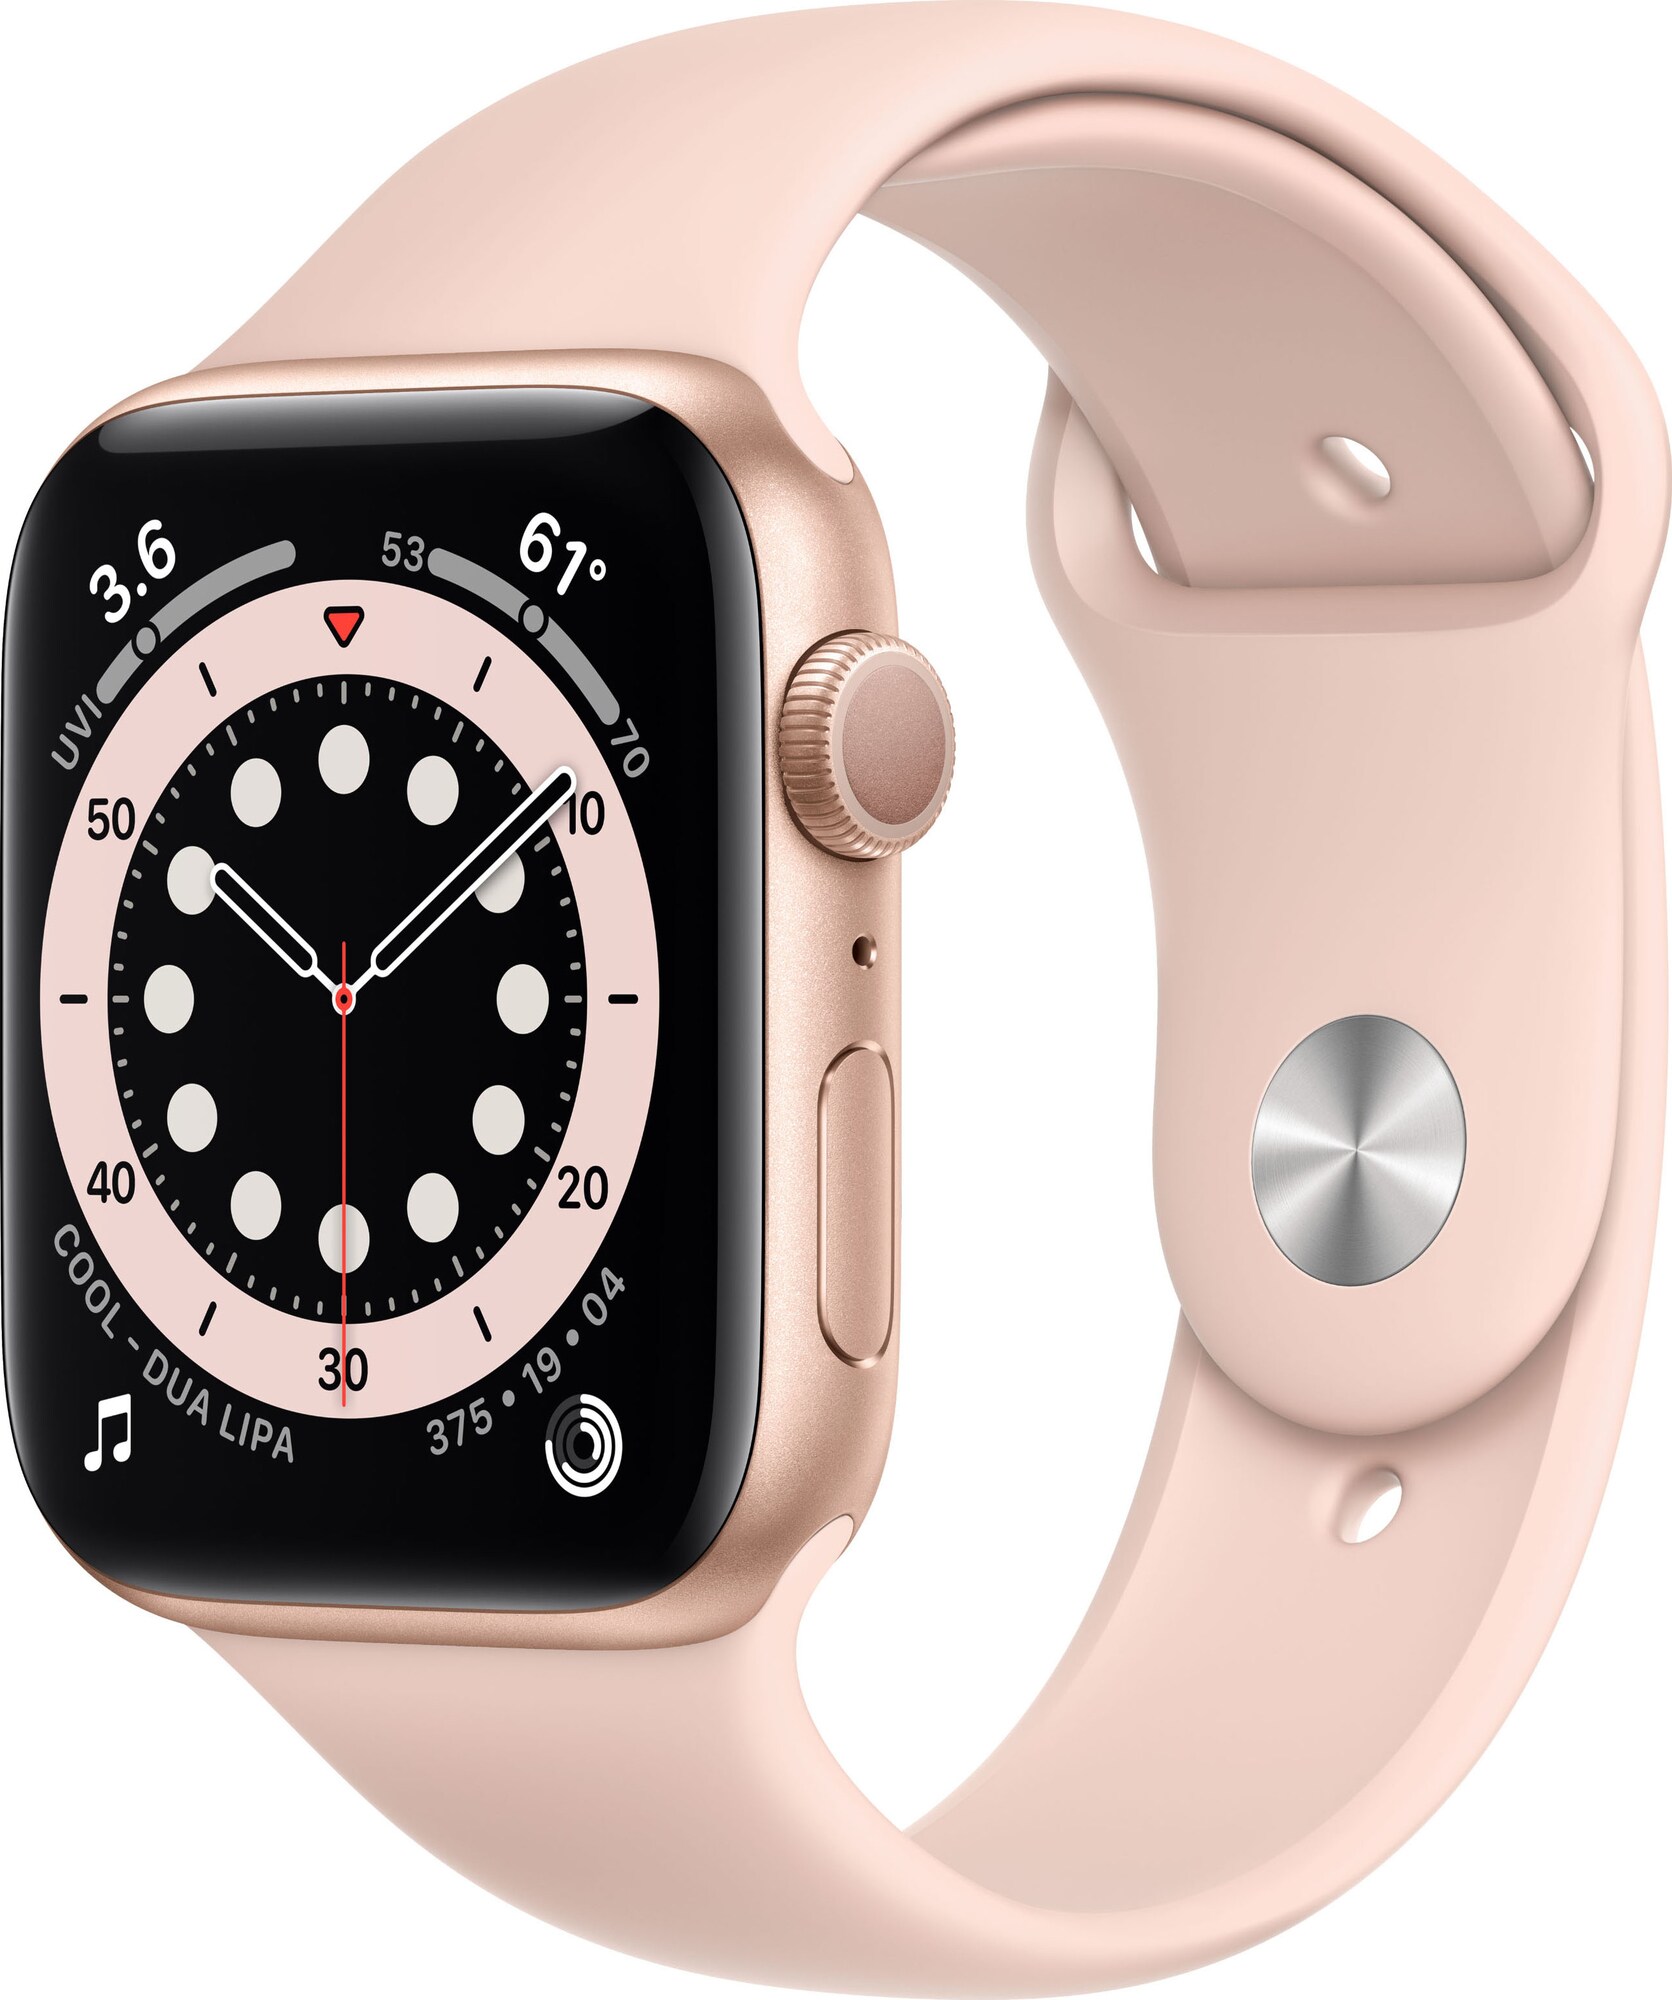 Apple Watch Series 3 Rem Factory Sale, 57% OFF | ilikepinga.com